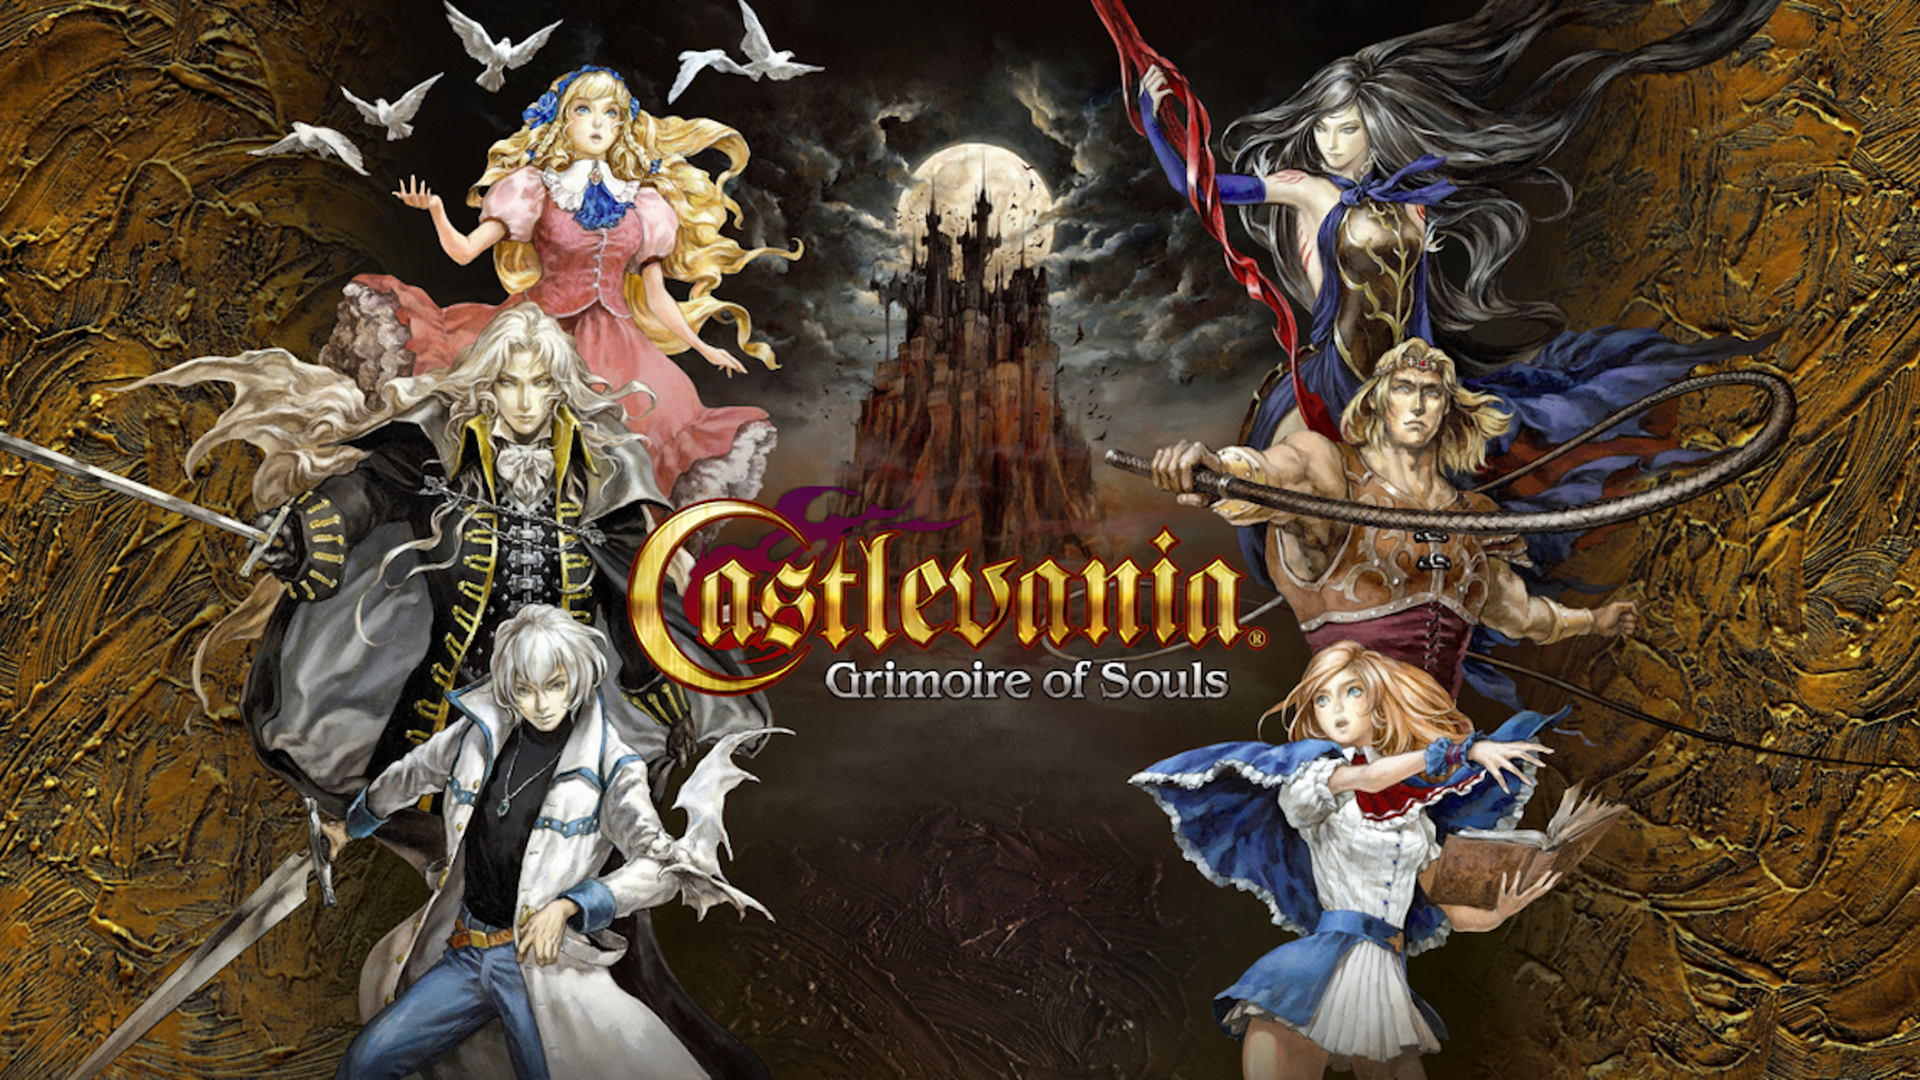 Cover art for Castlevania: Grimoire of Souls